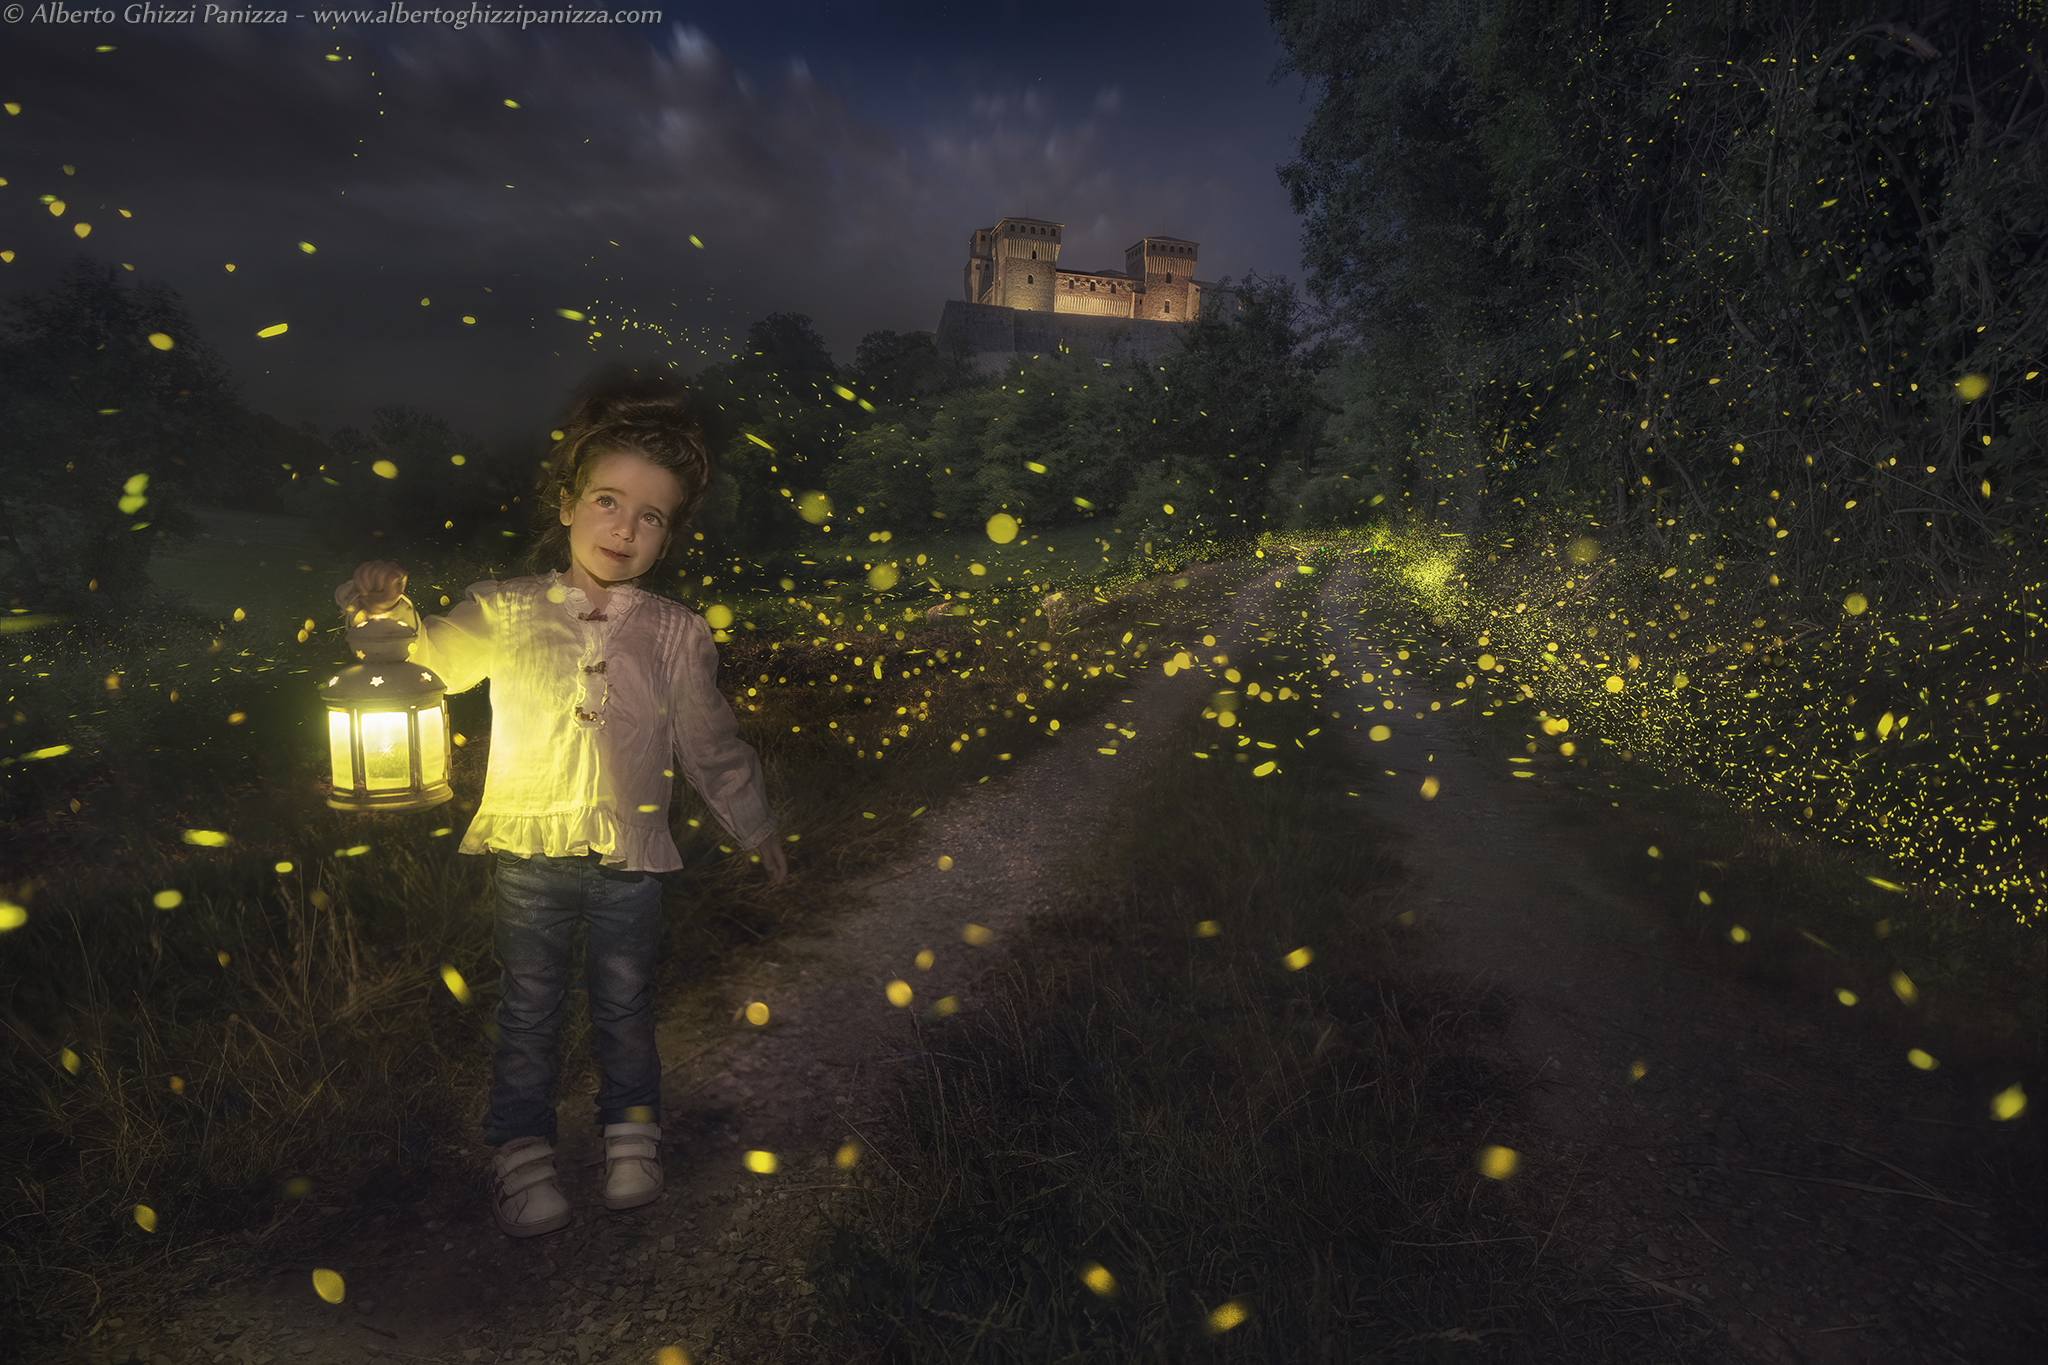 A princess among fireflies...